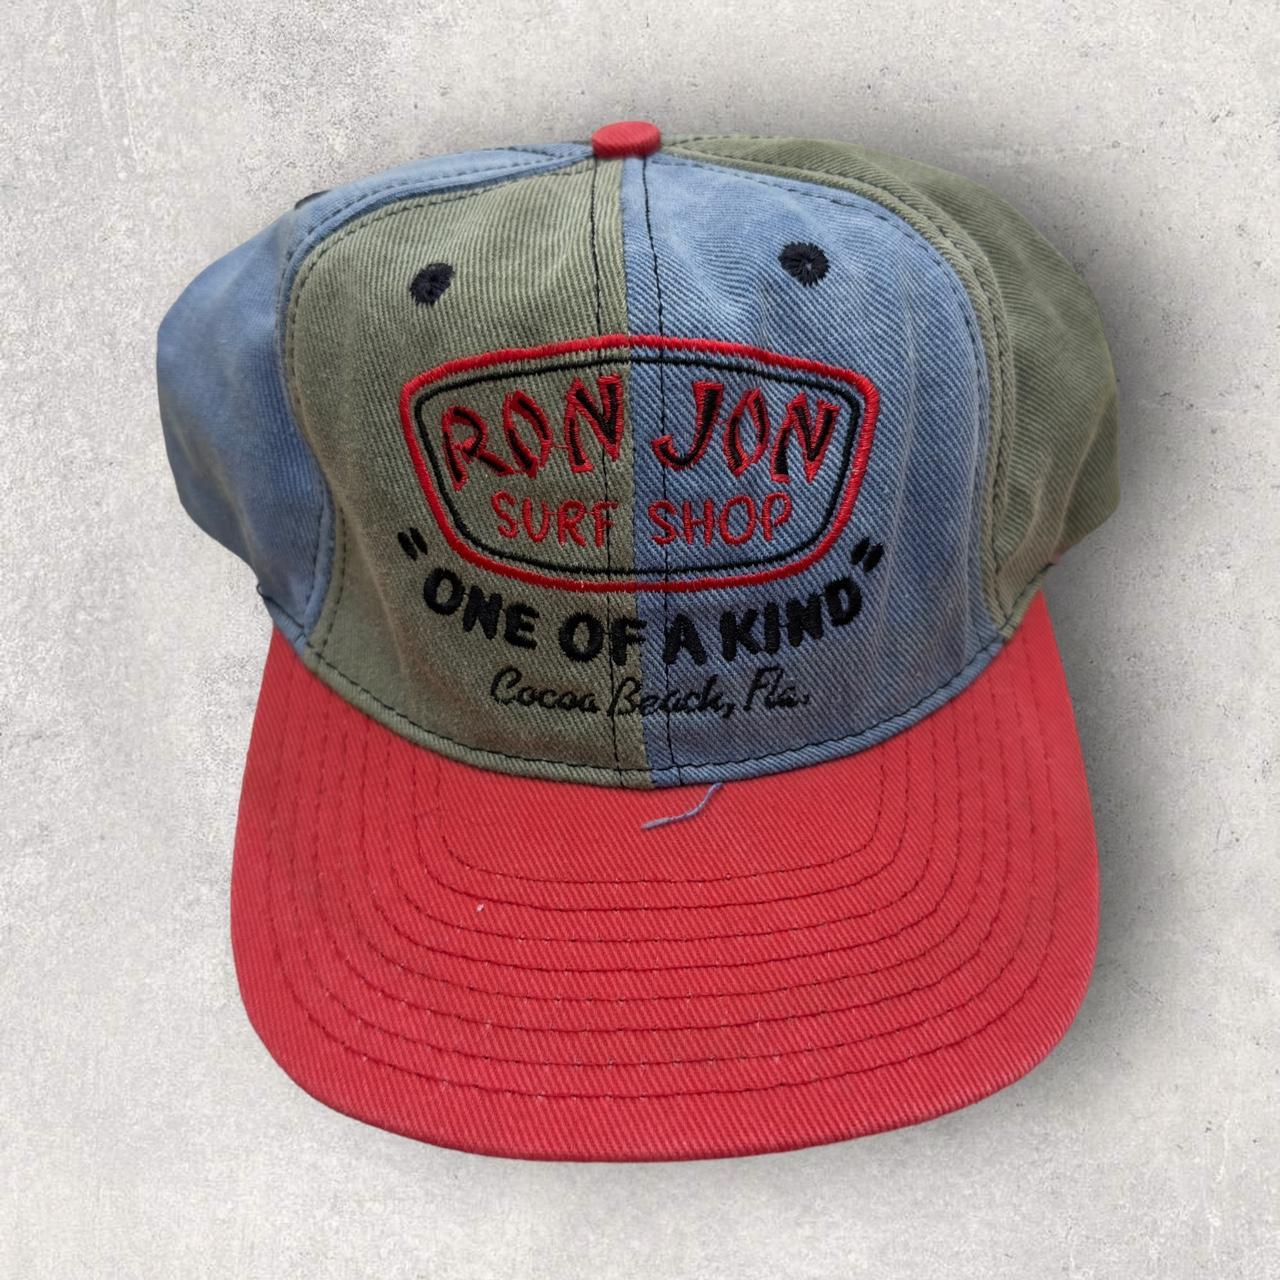 Vintage Ron Jon Surf Shop snapback hat. From the... - Depop